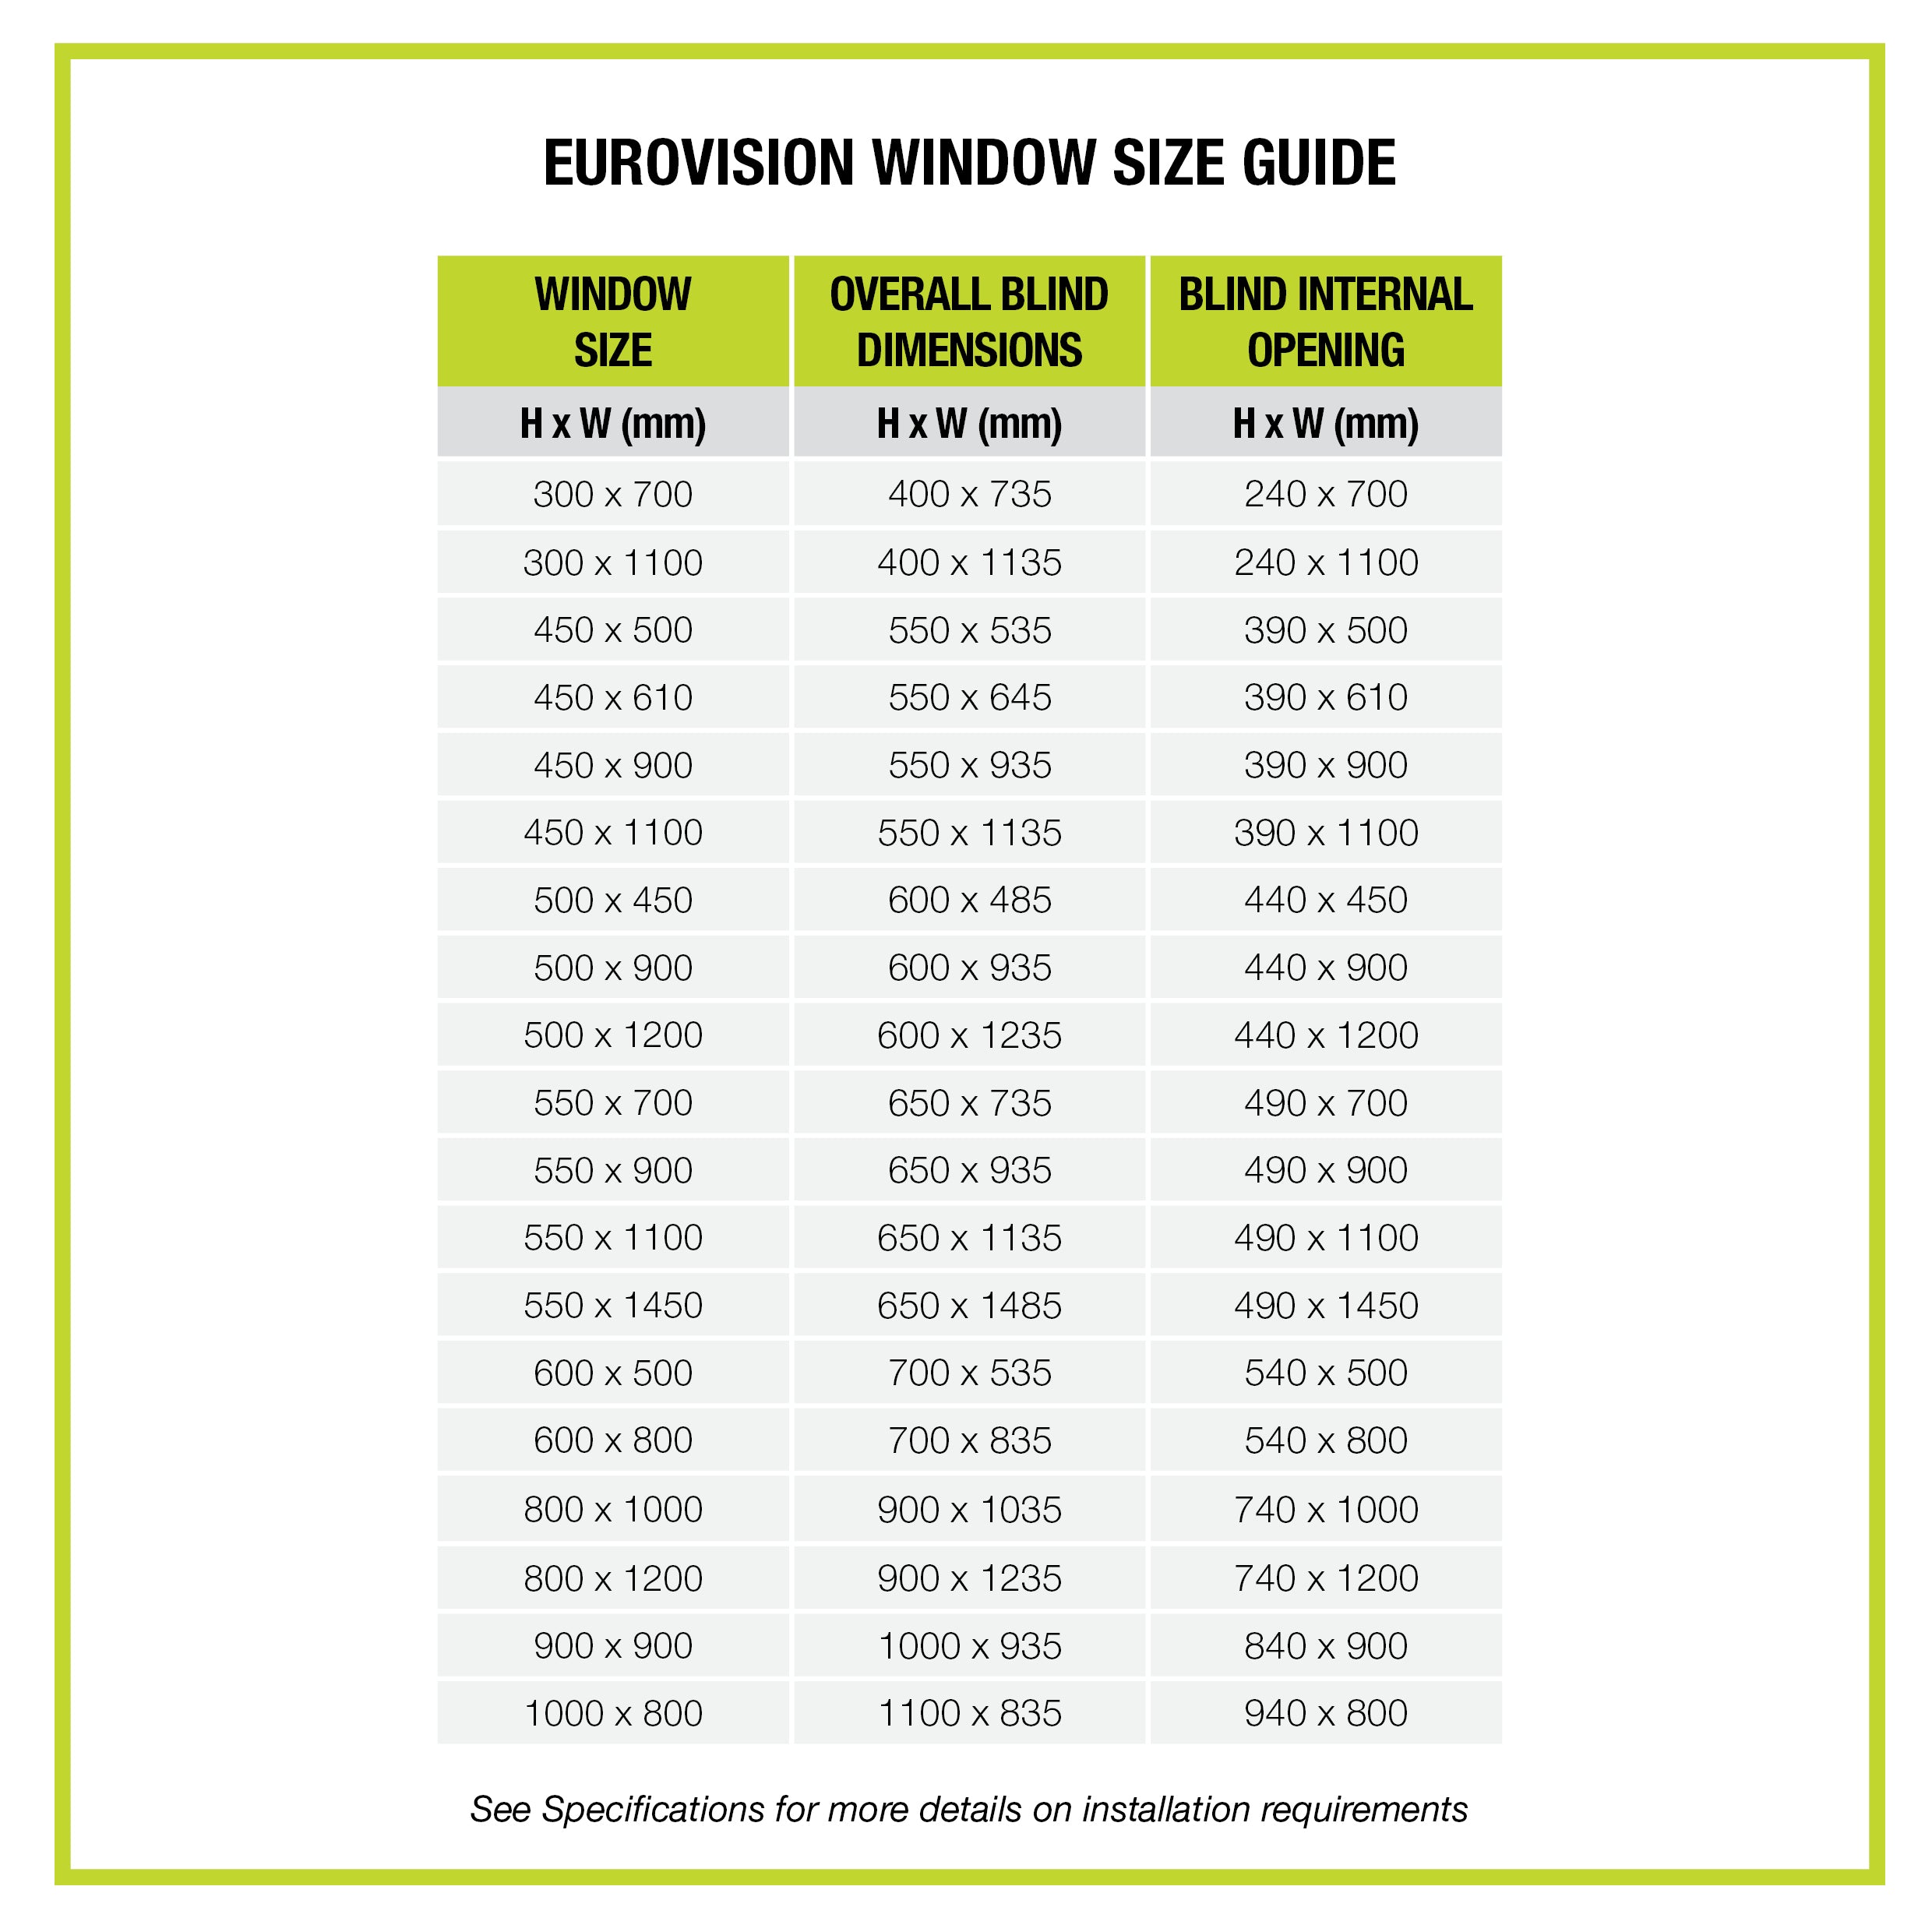 EuroVision 2 Window & Blind